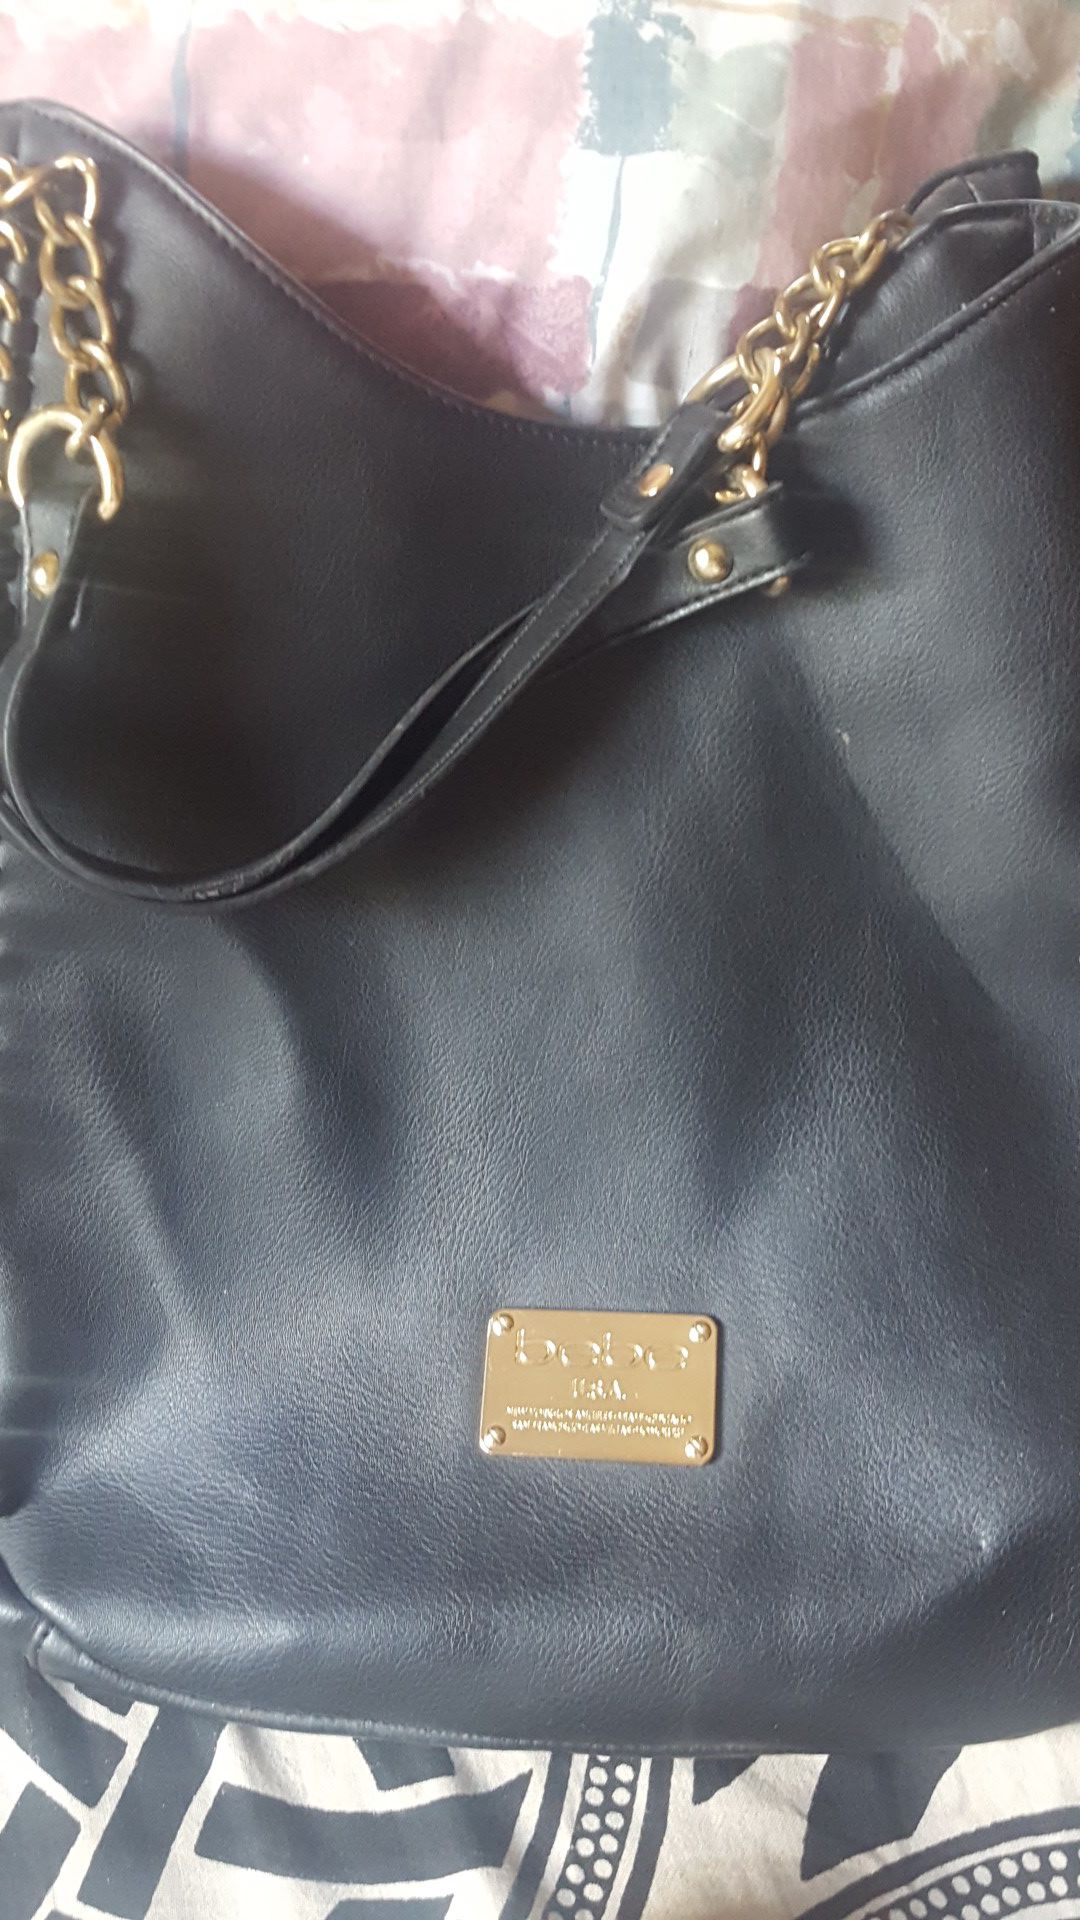 Bebe black leather purse